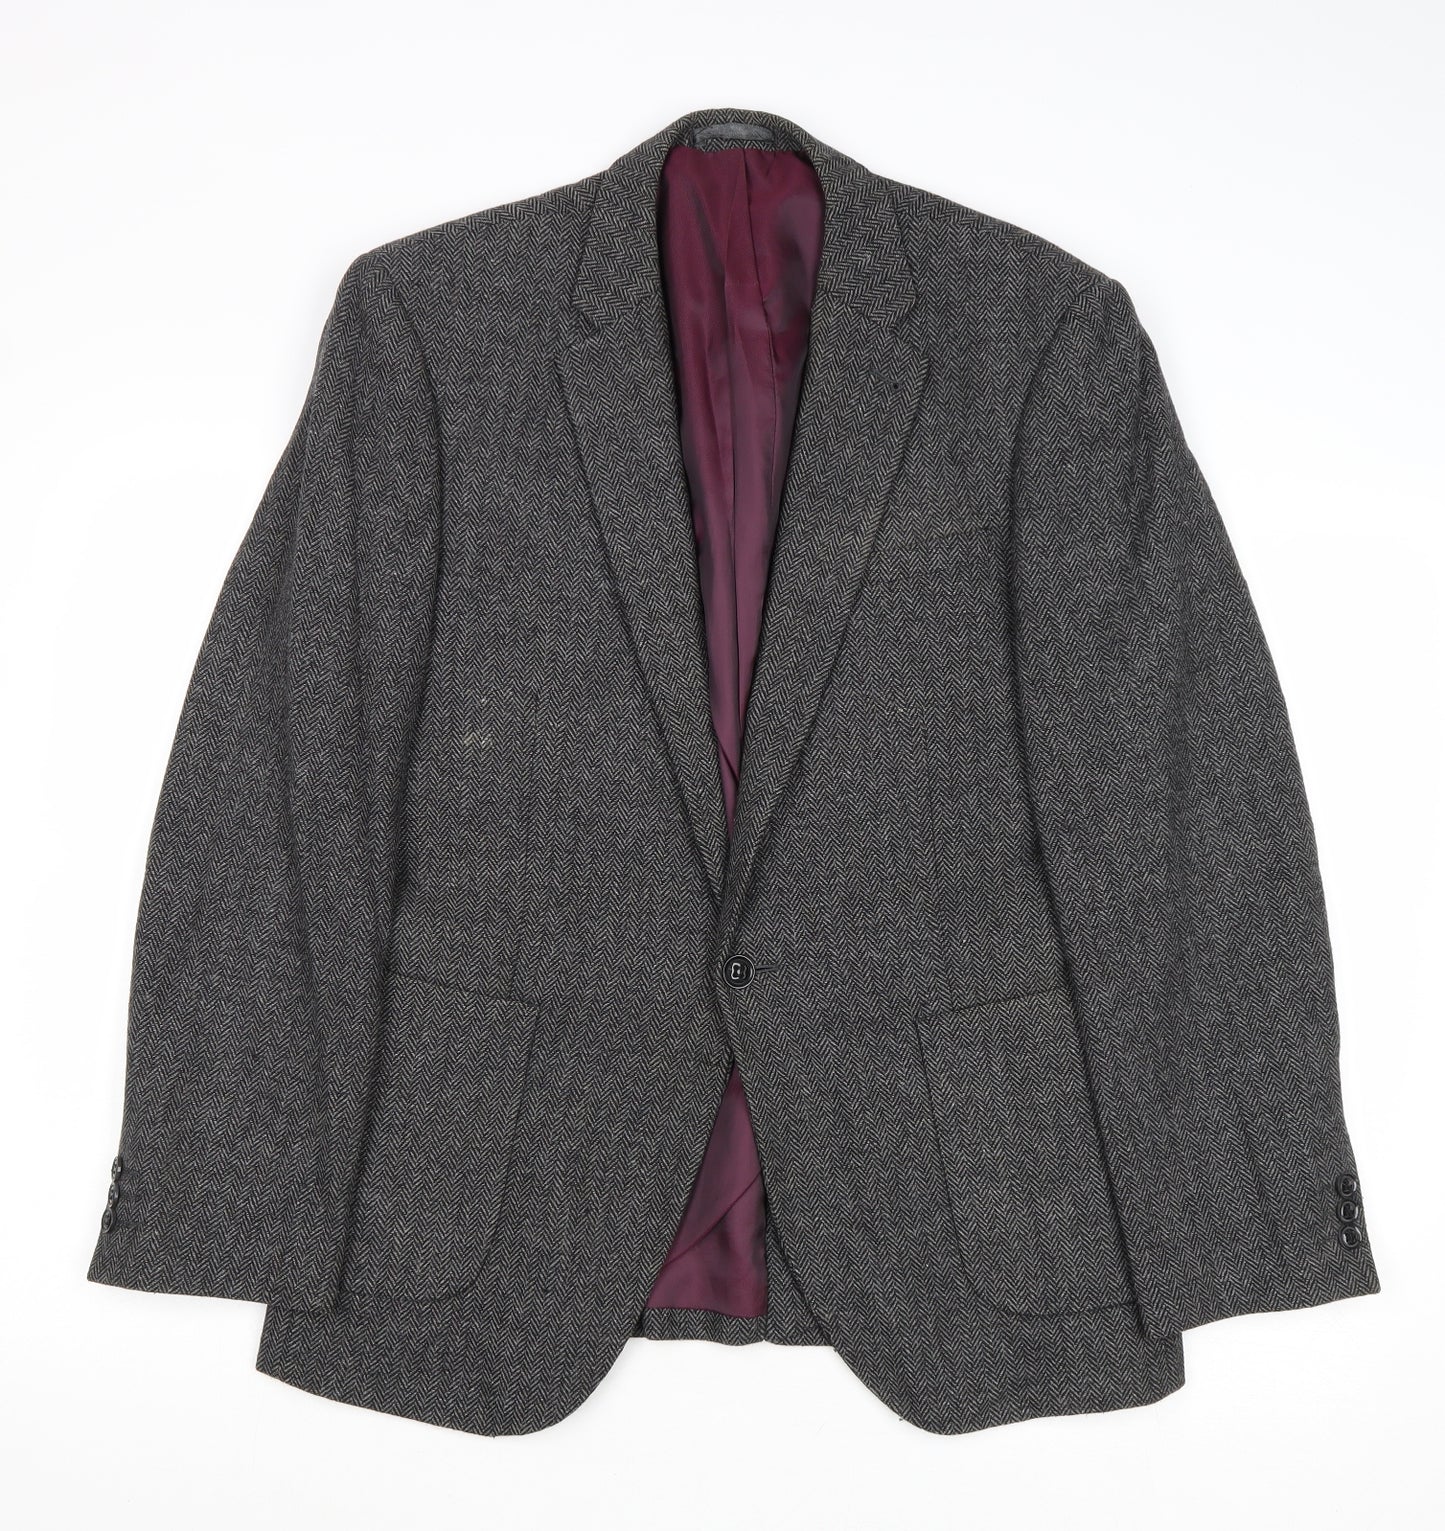 B&W Mens Grey Wool Jacket Blazer Size 38 Regular